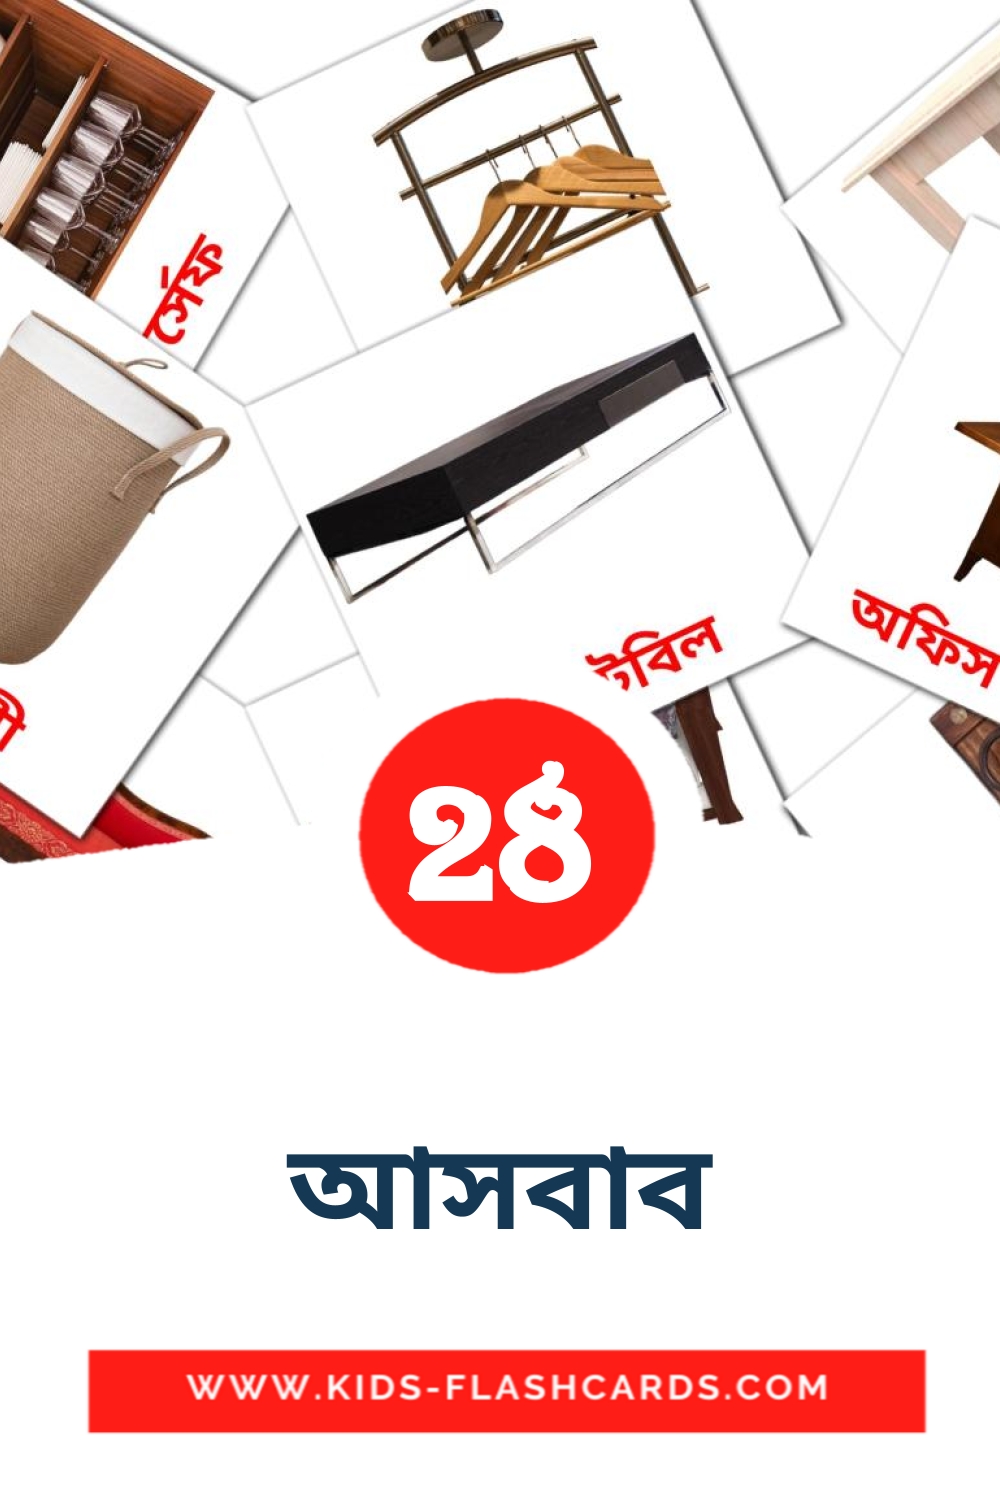 28 carte illustrate di আসবাব per la scuola materna in bengalese